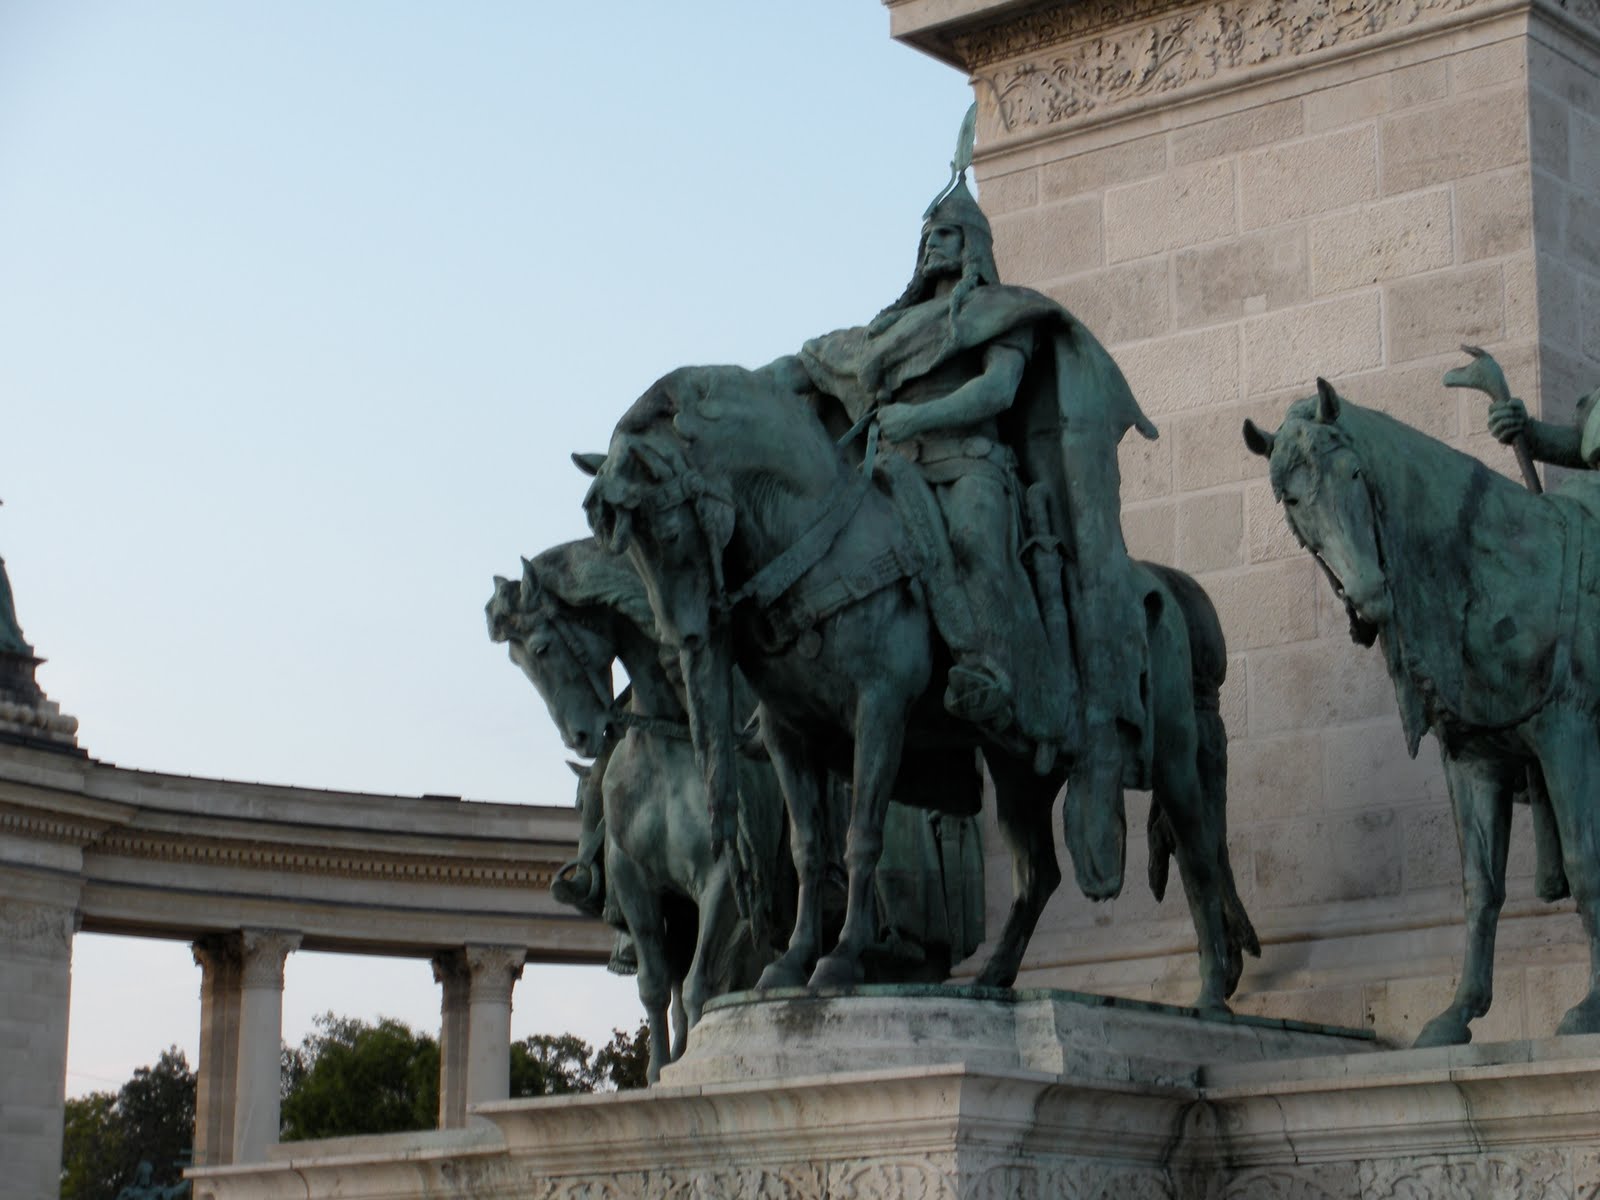 The statue of Attila the Hun in Budapest, Hungary